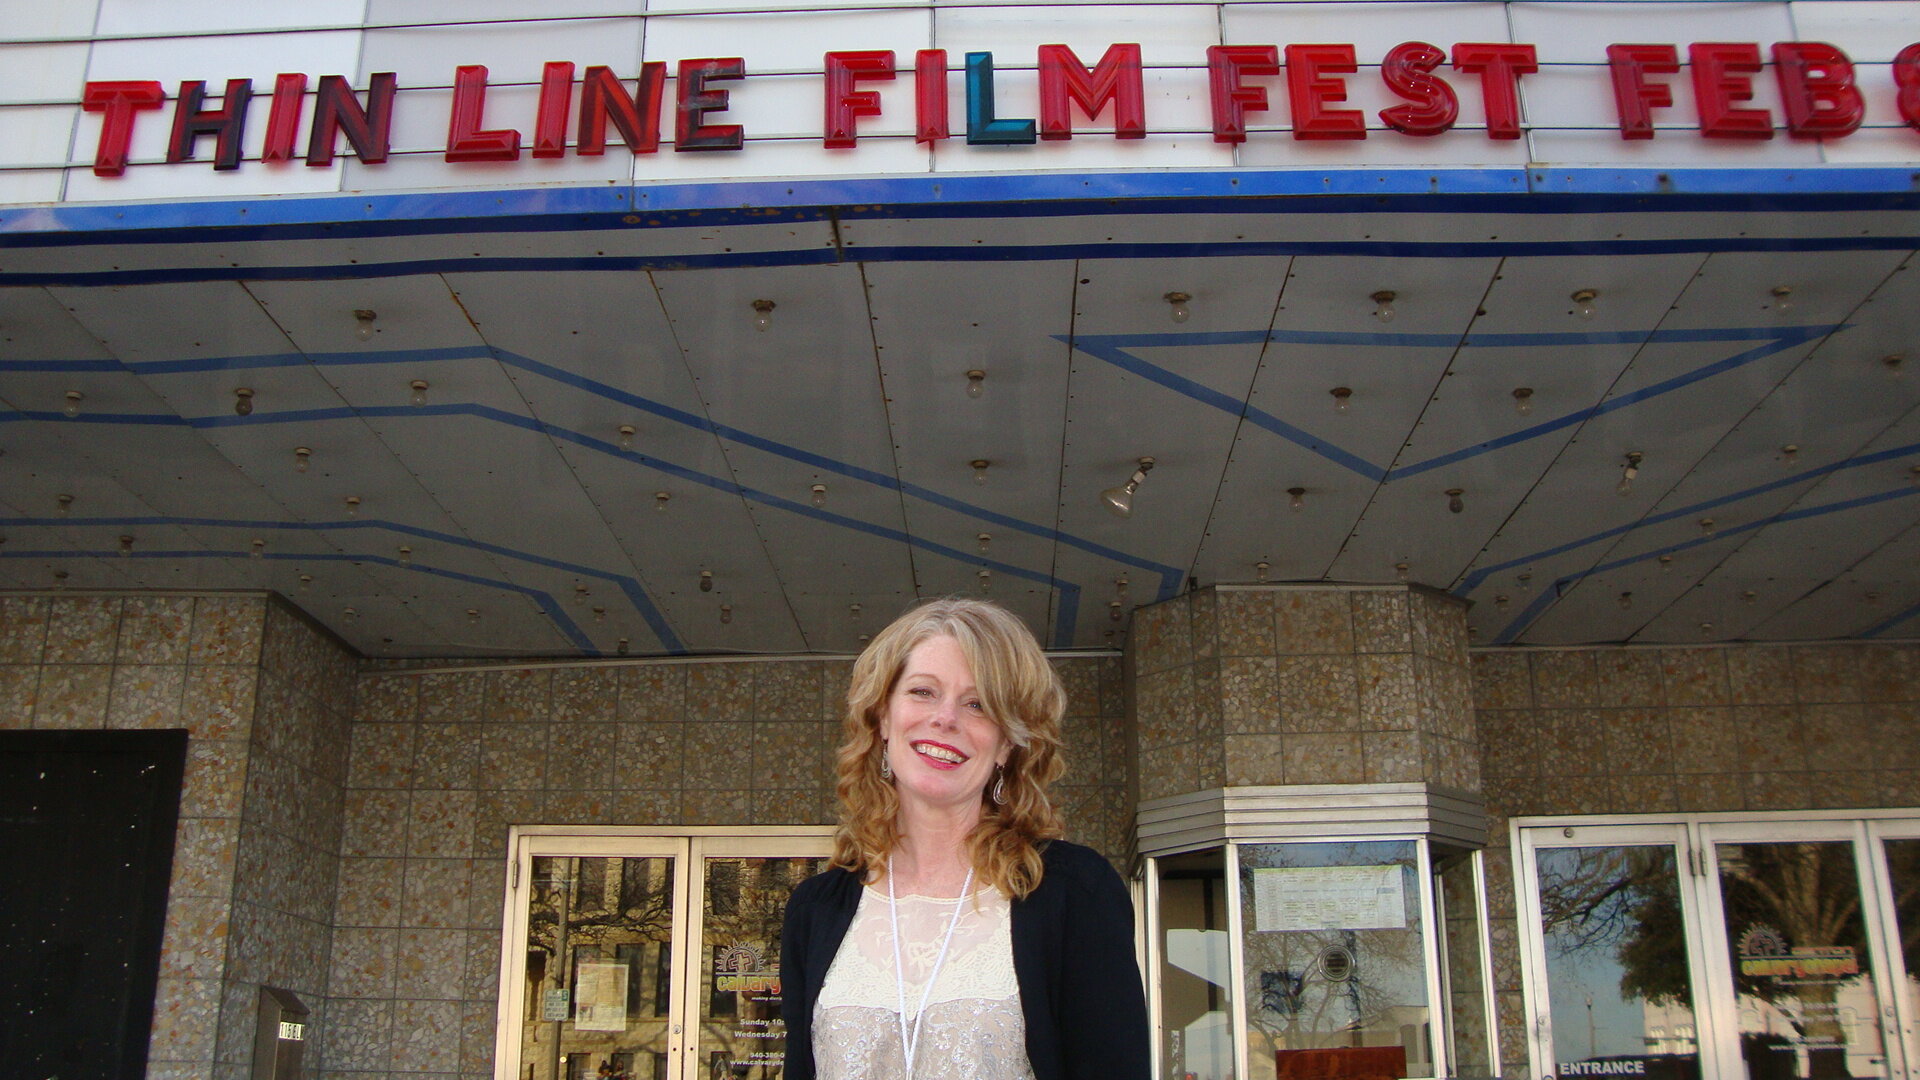 Thin Line Film Festival.JPG